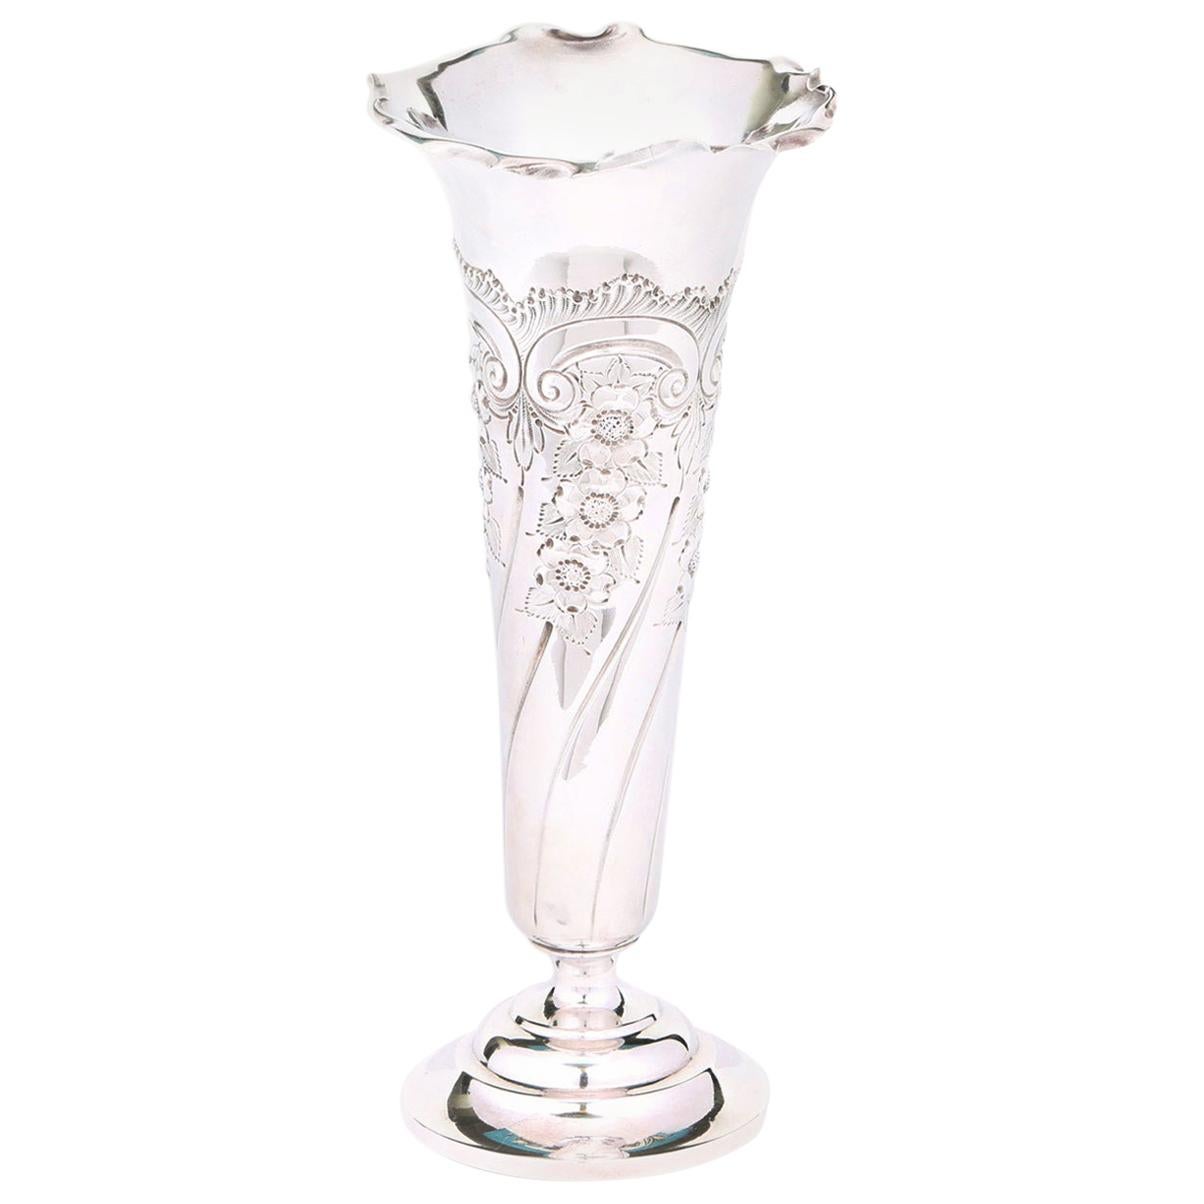 Englische versilberte dekorative Vase